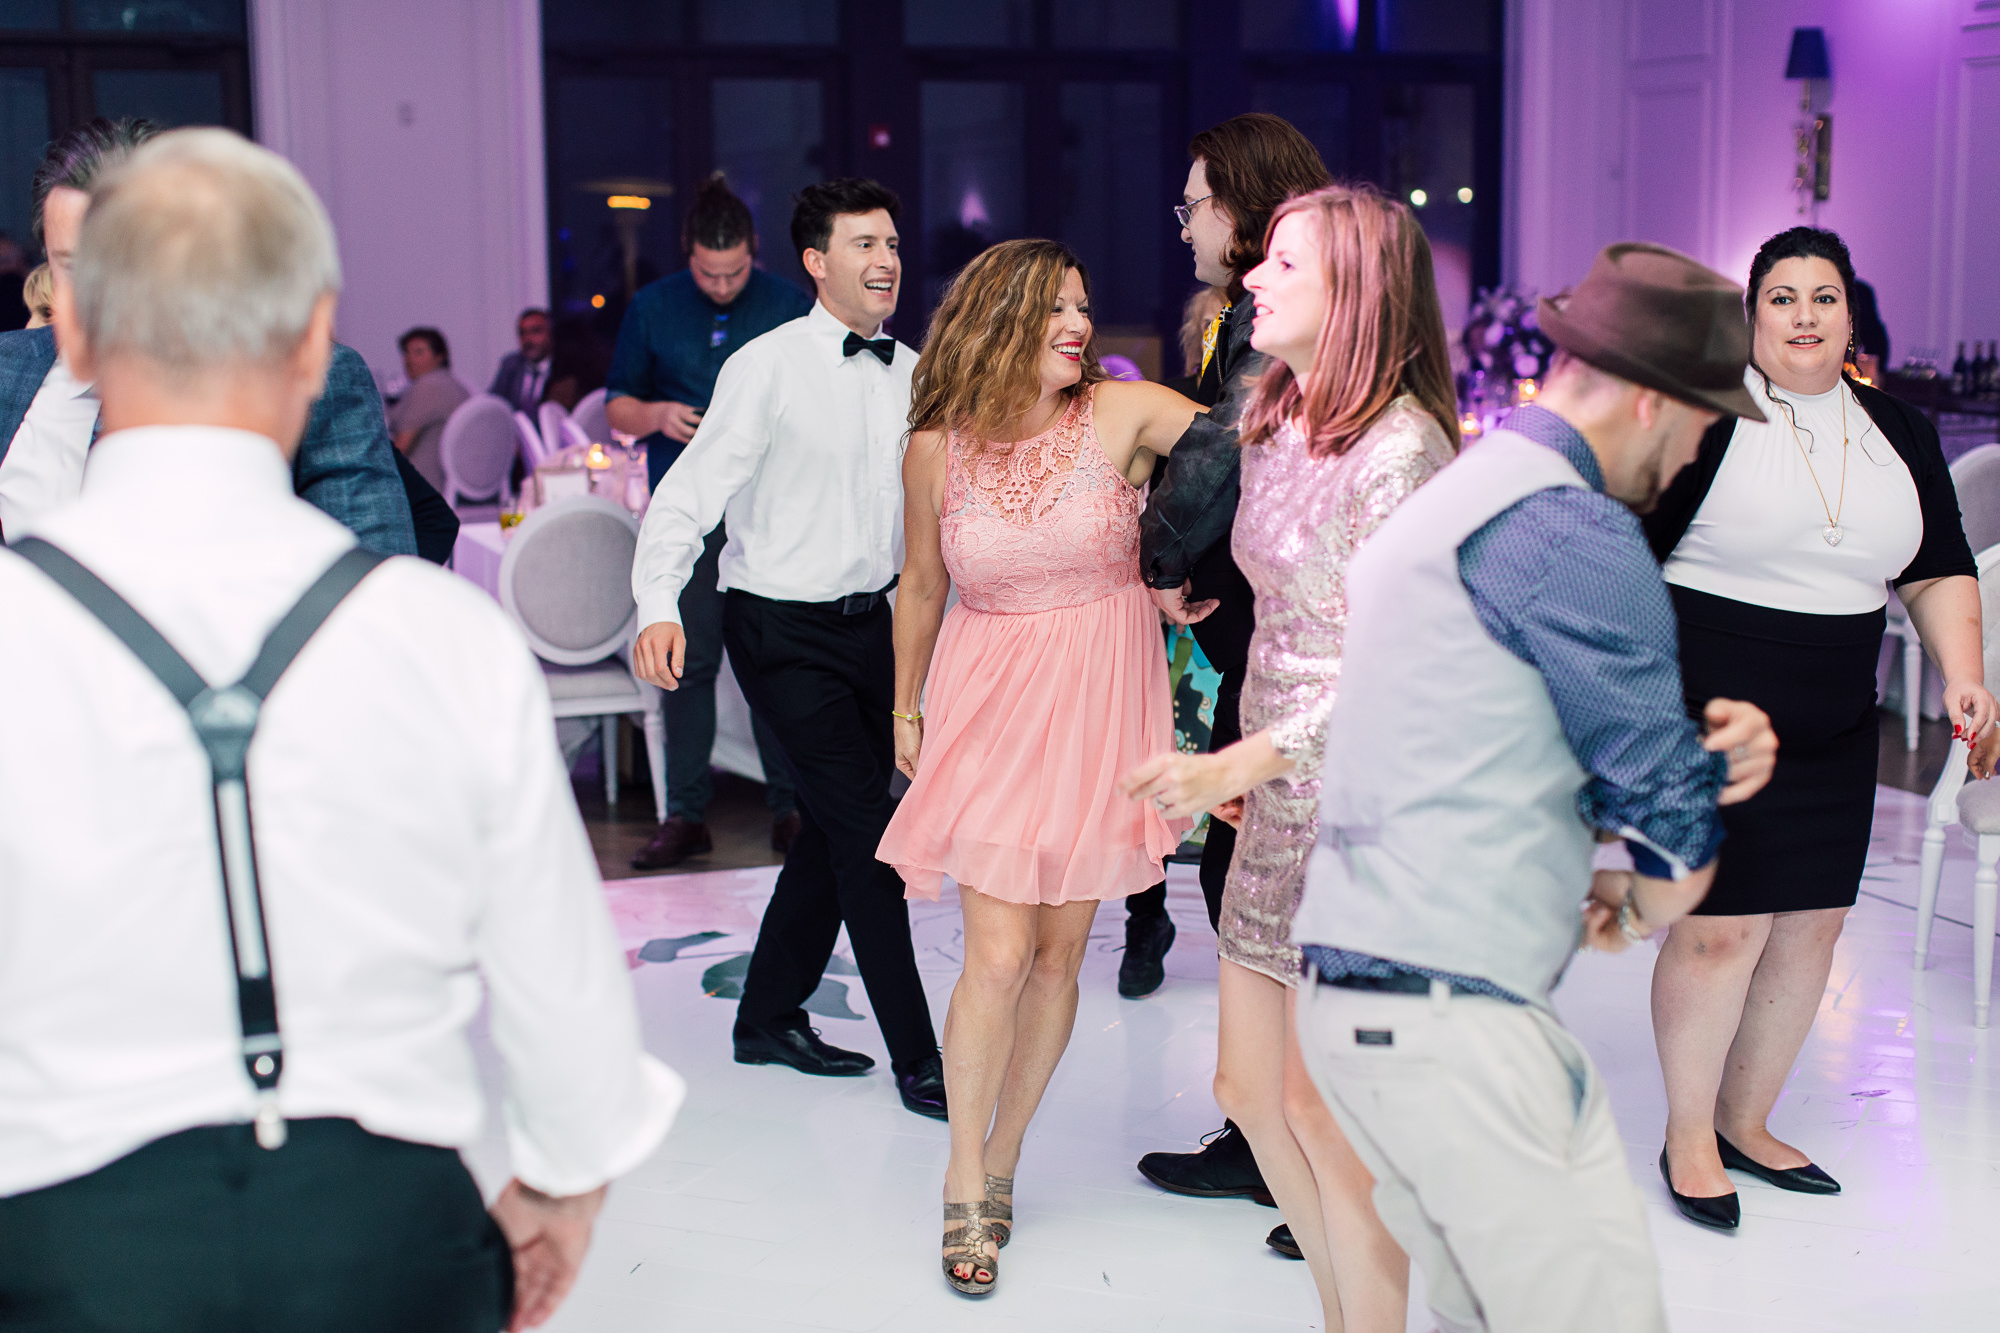 dancing wedding reception